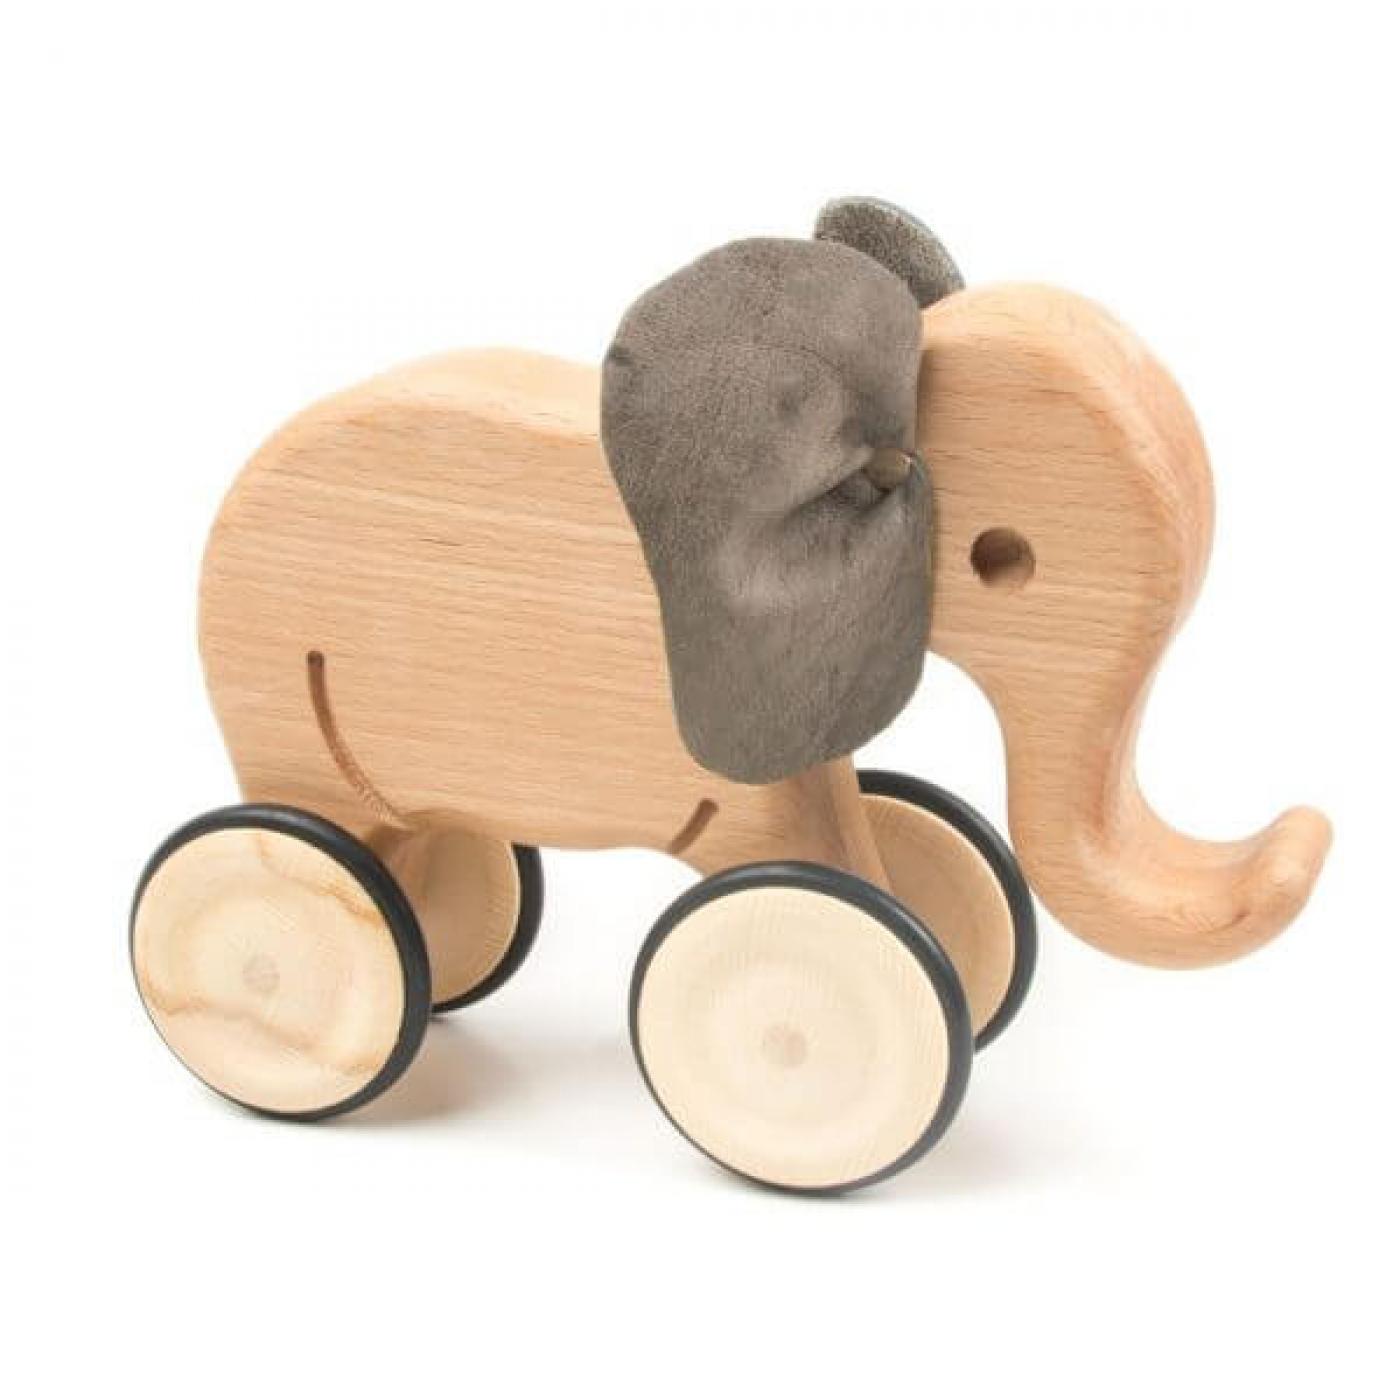 Holzelefant von Koch Systems Holzspielzeug Onlineshop.